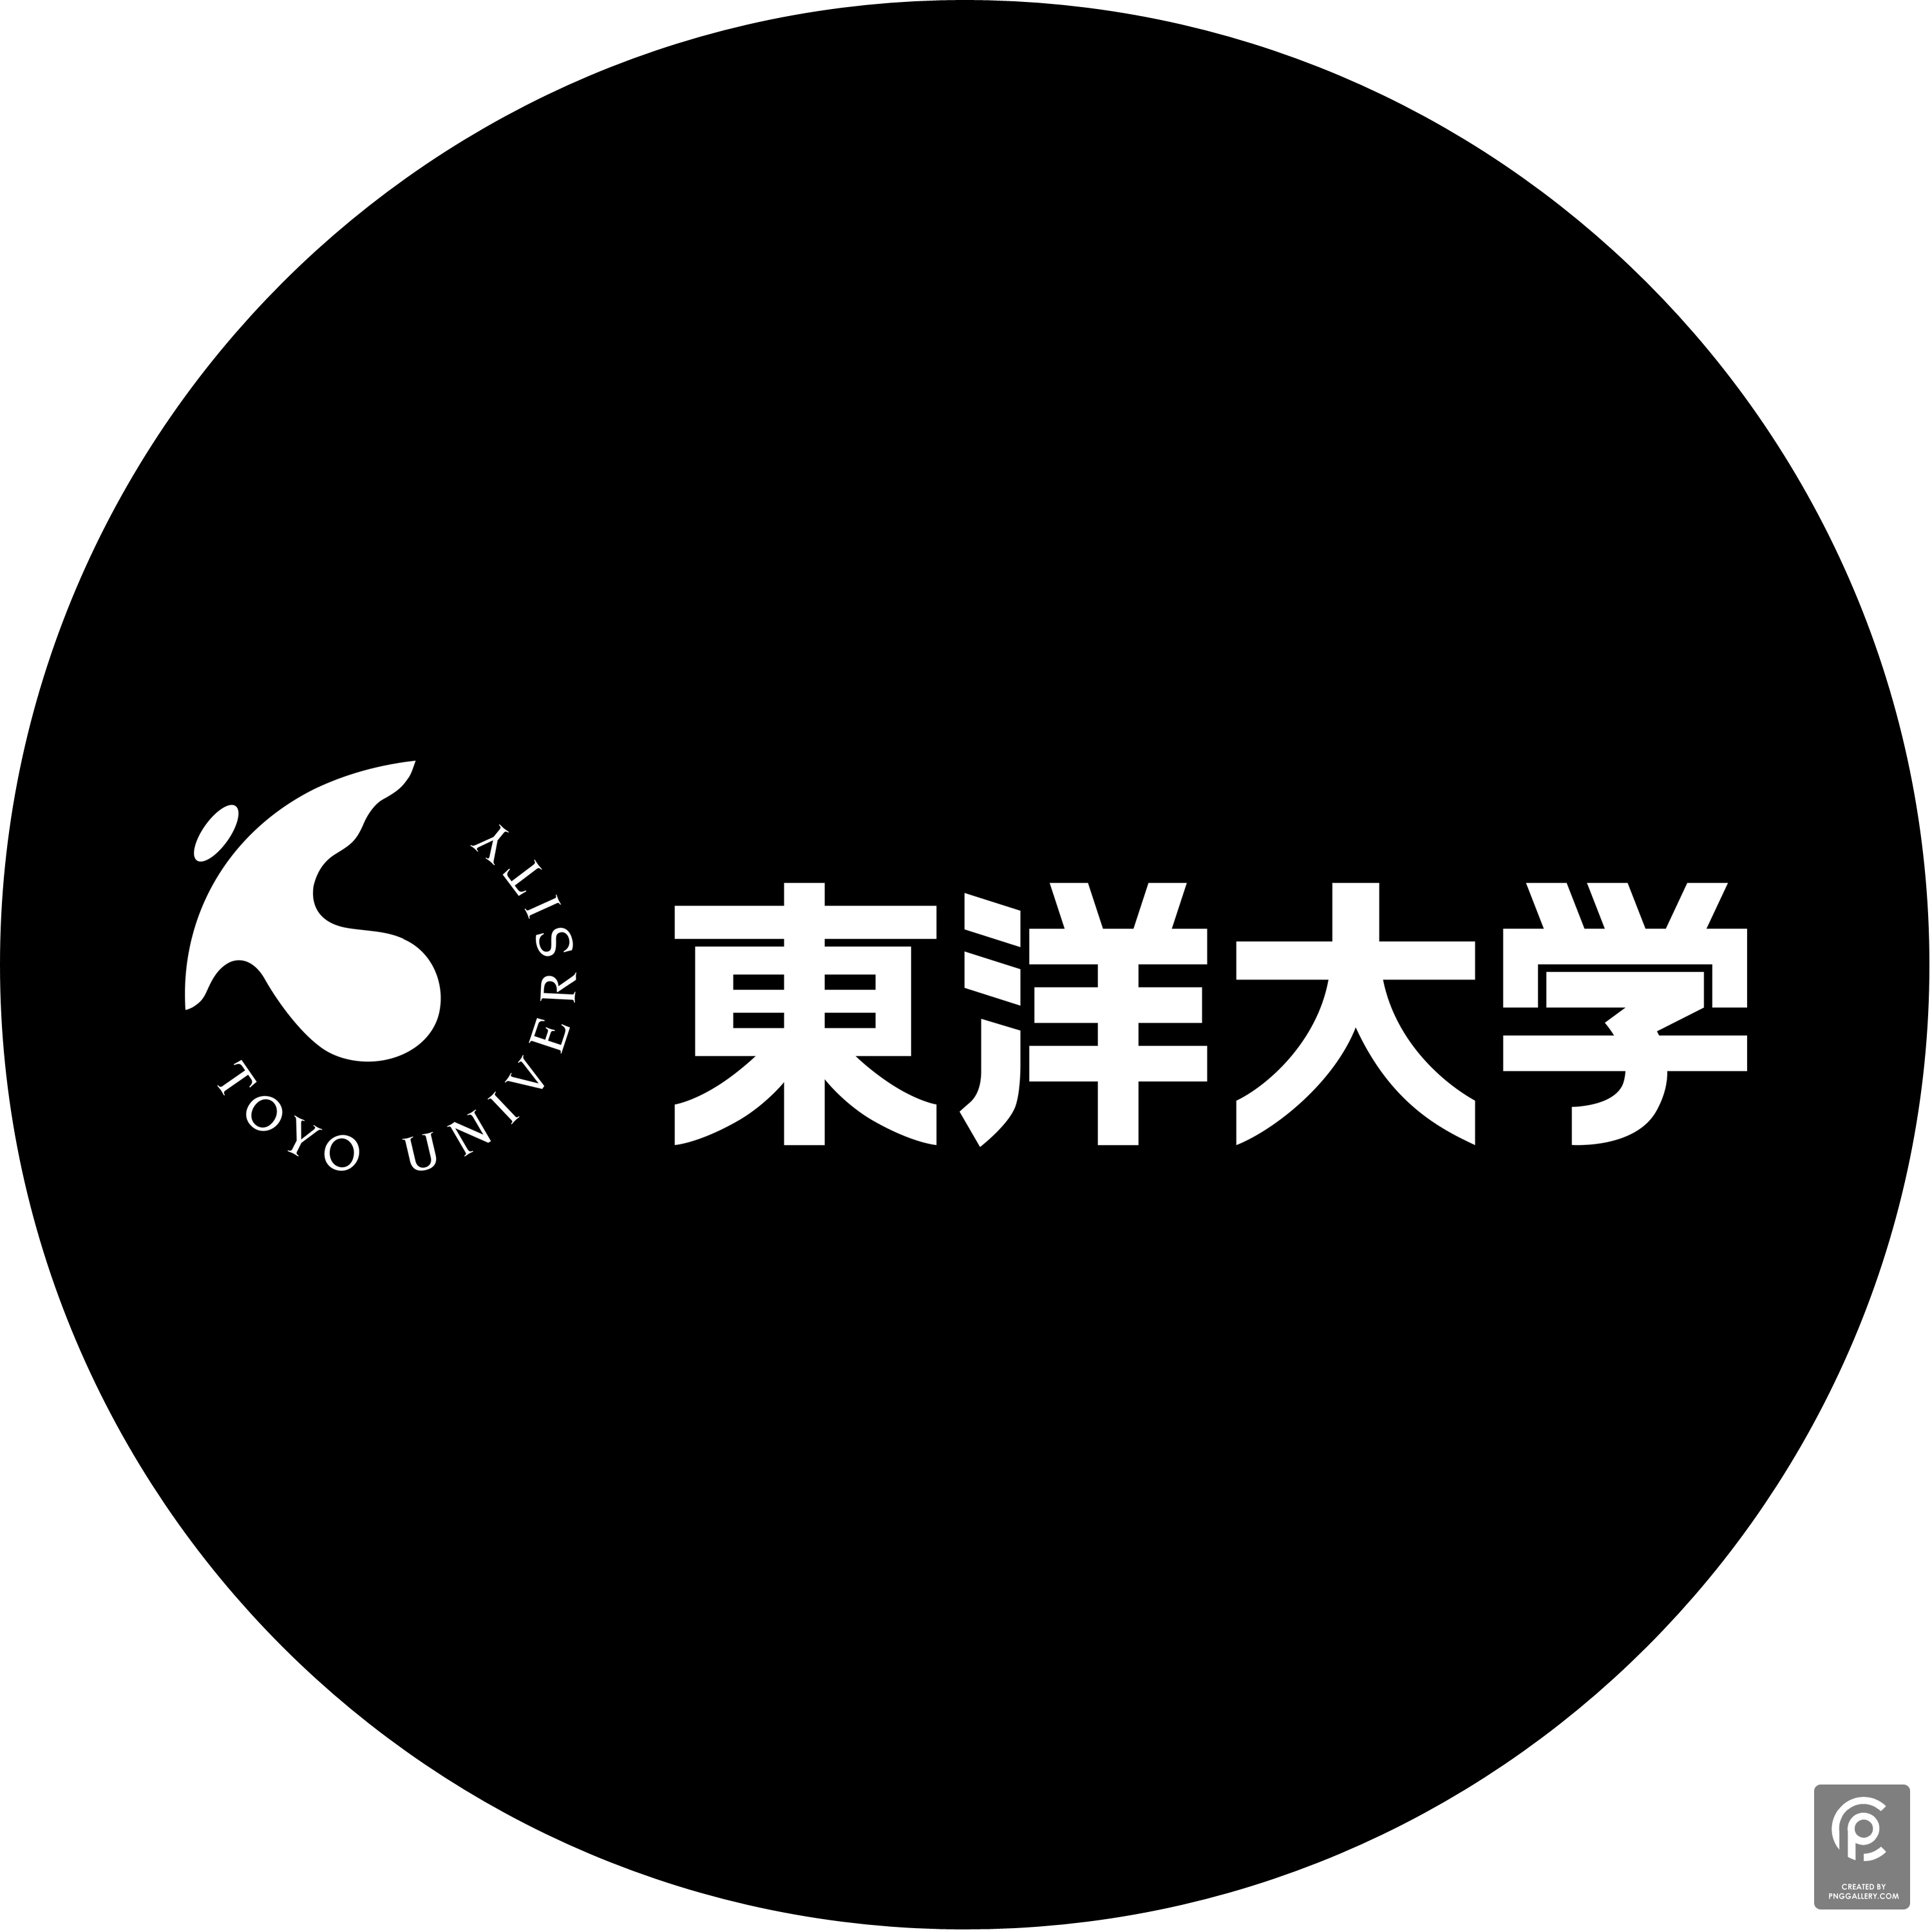 Toyo University Logo Transparent Clipart